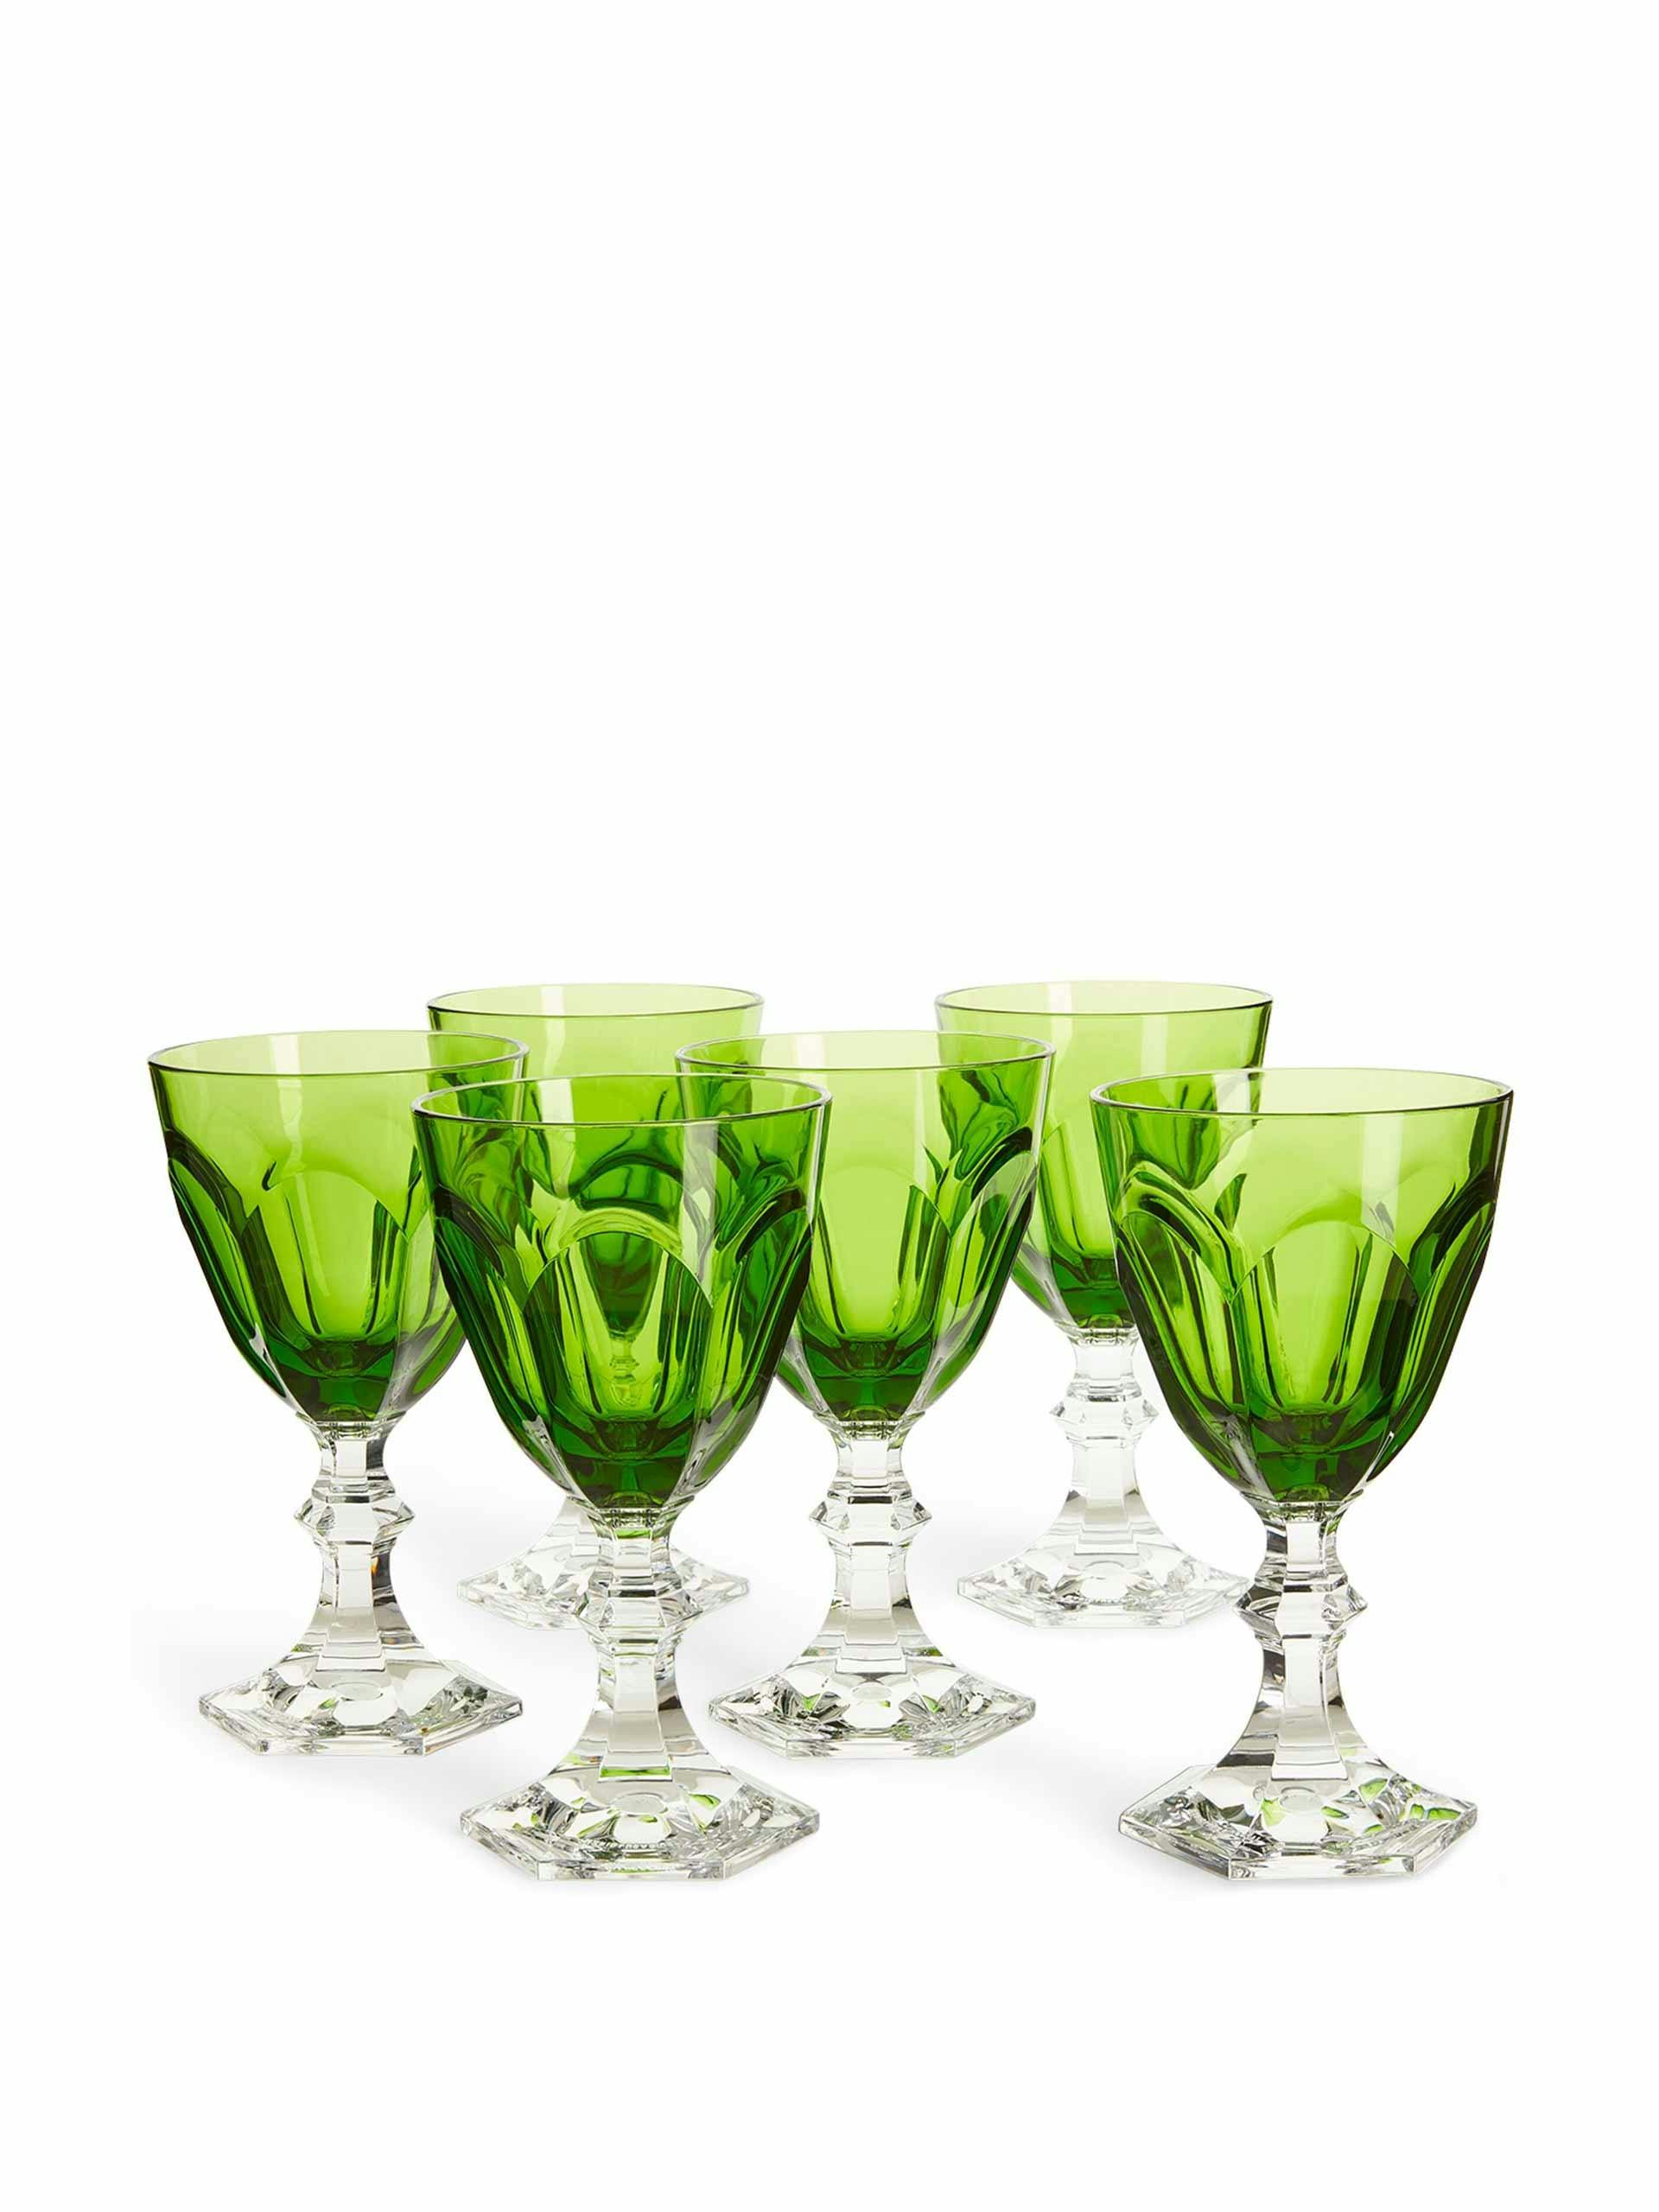 Set of 6 green wine glasses